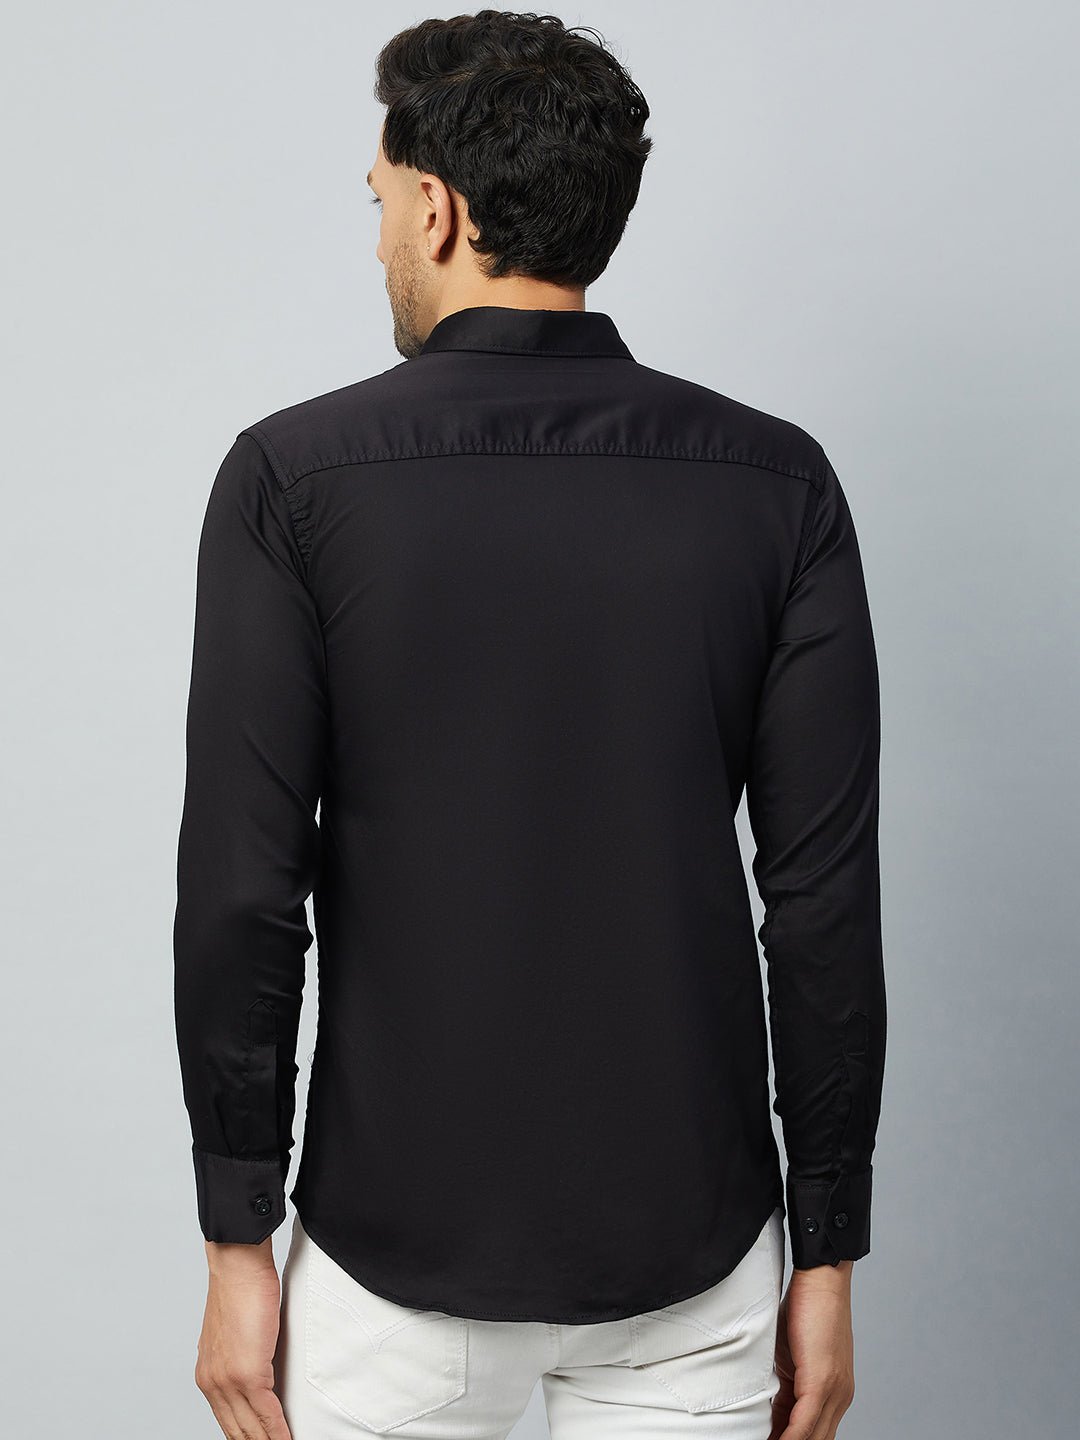 Black Full Sleeve Casual Shirt - clubyork